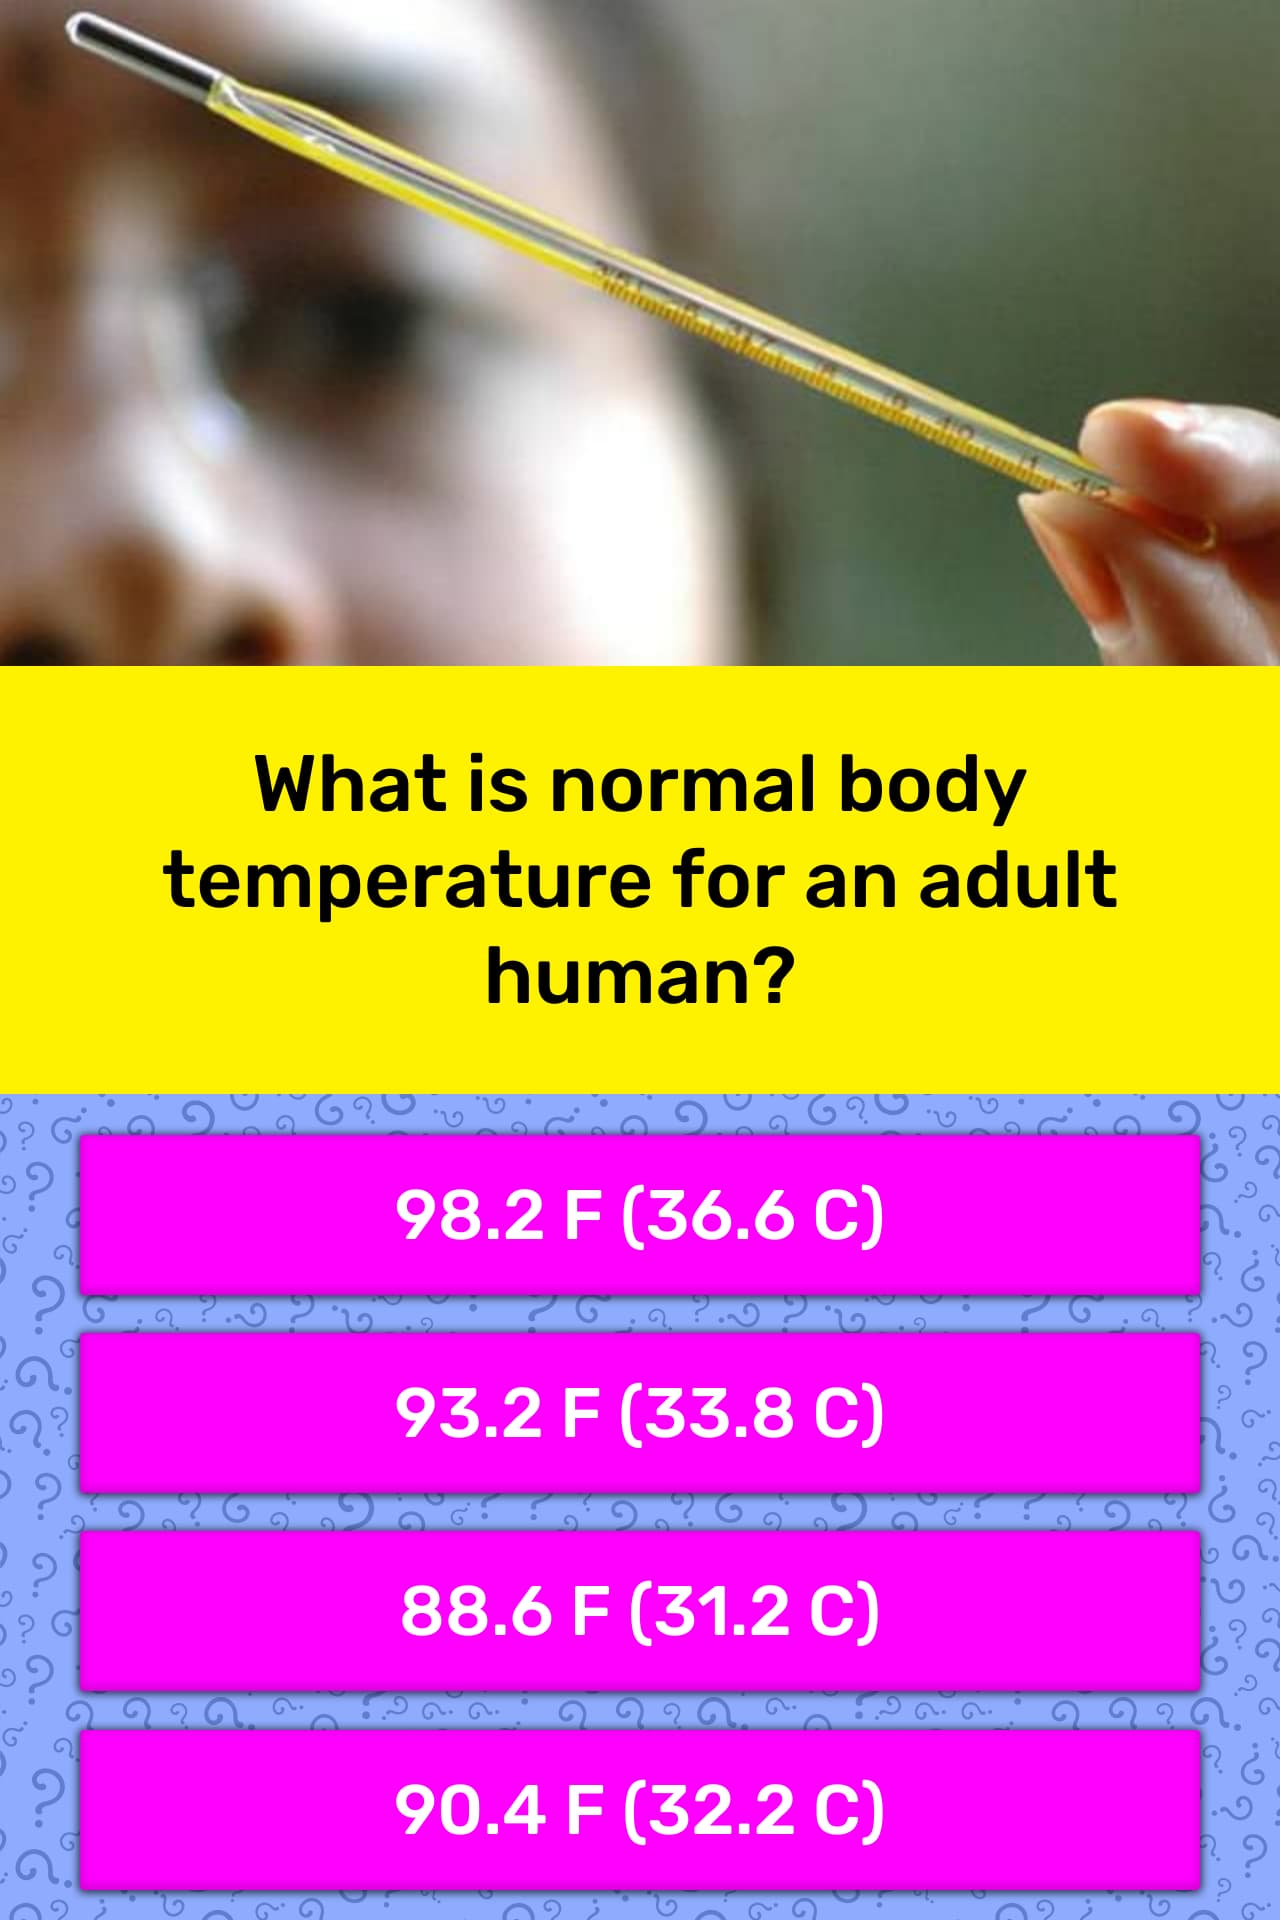 Normal adult body temperature